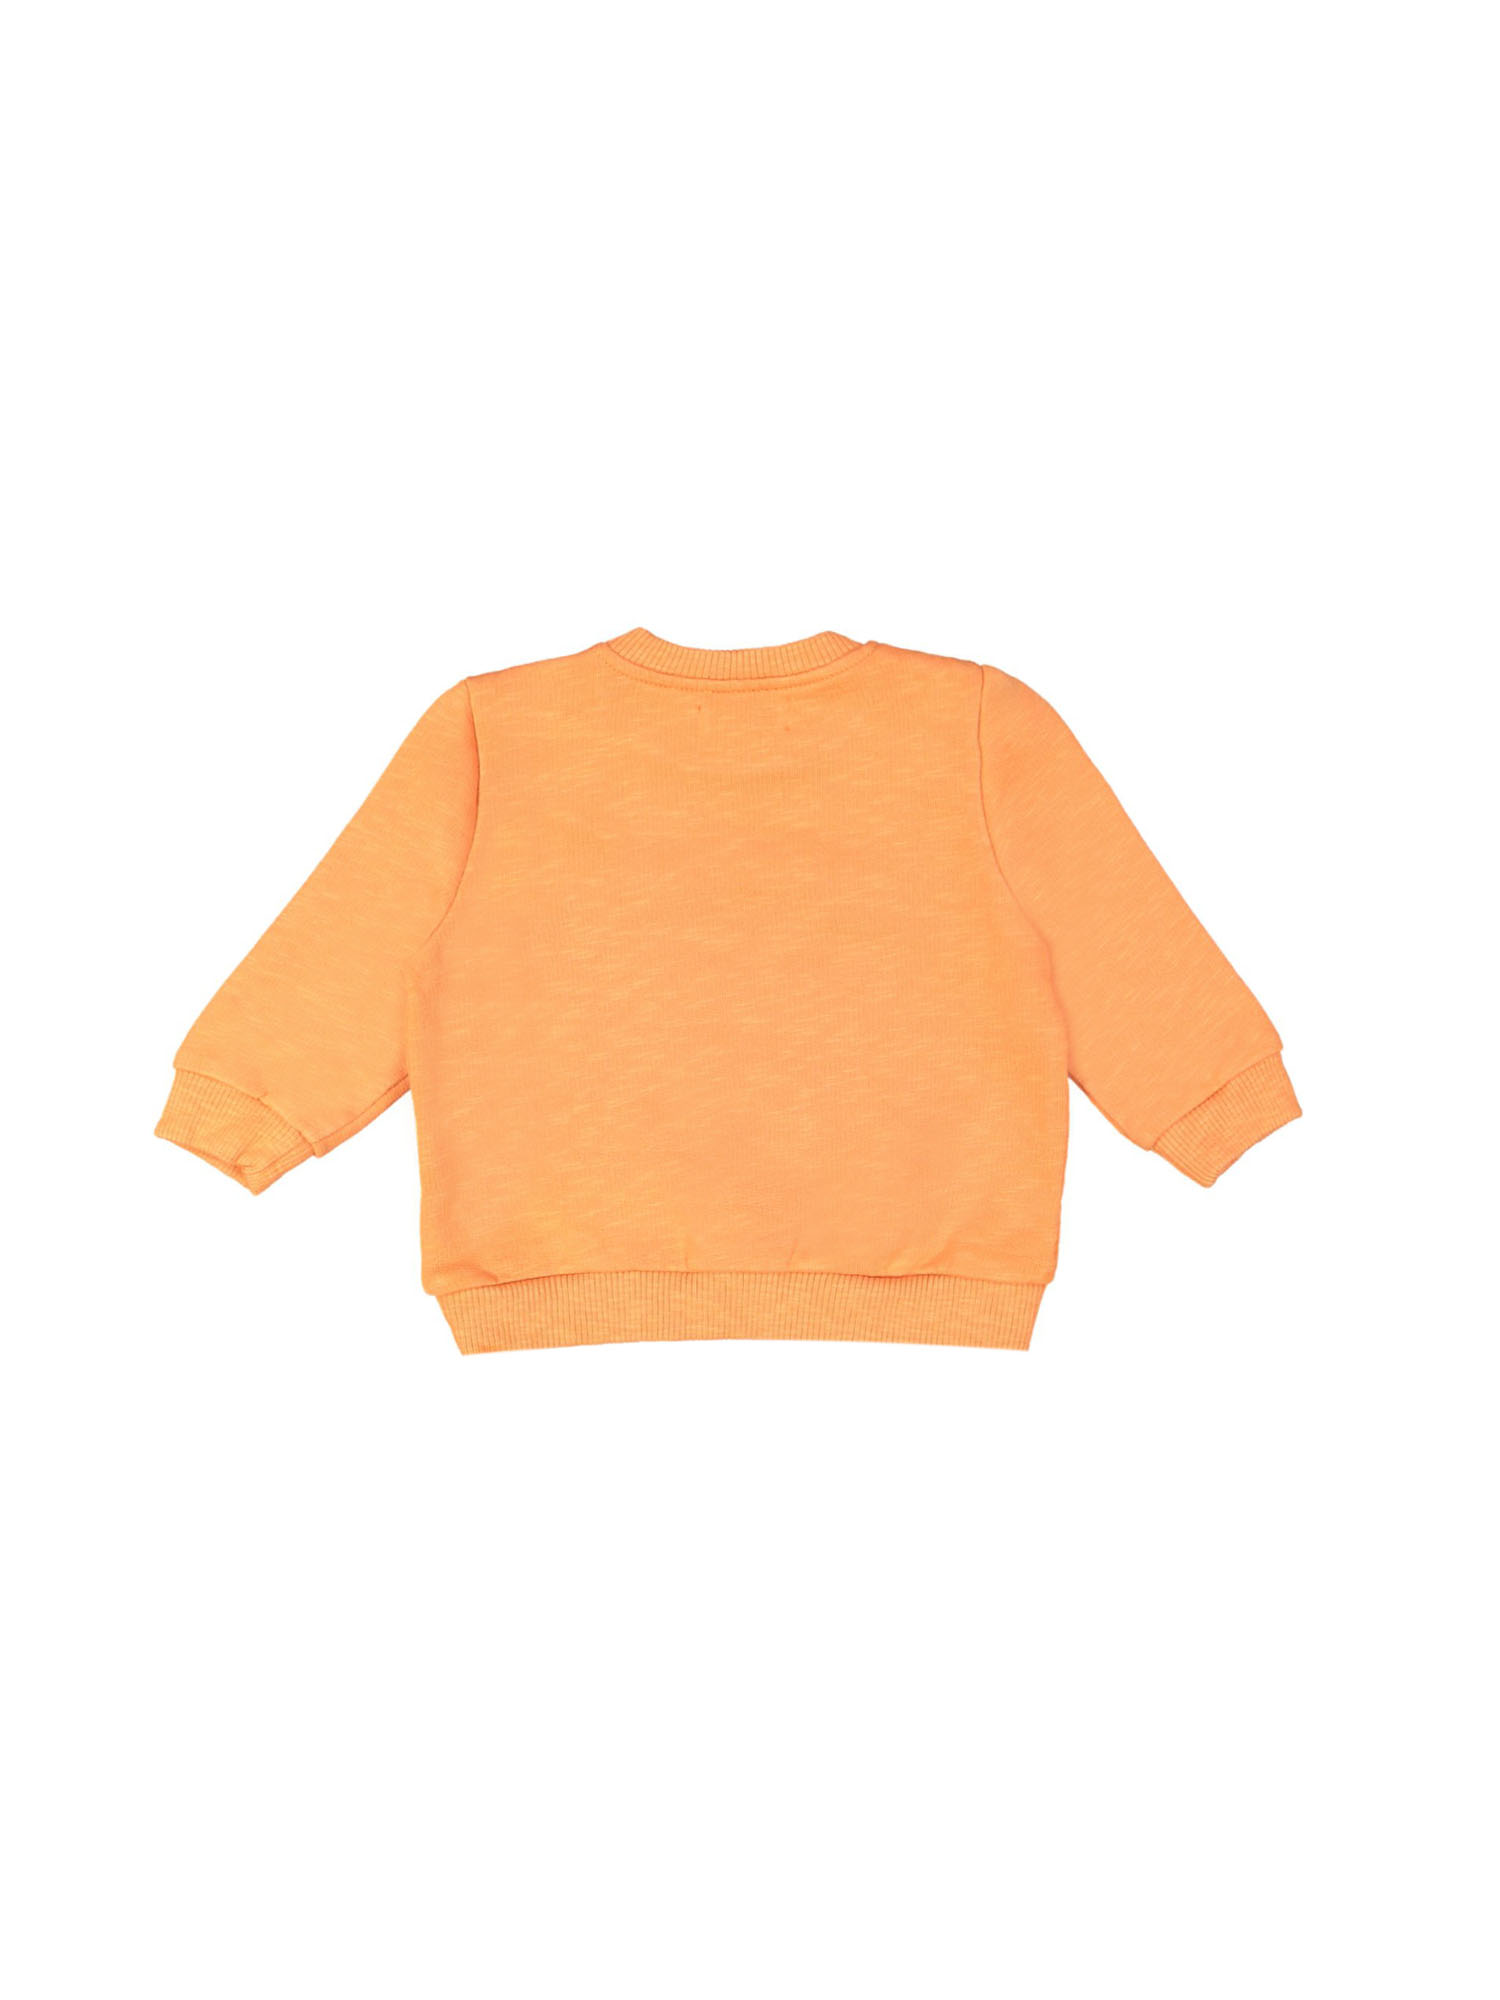 sweater mini doubleF orange 09m